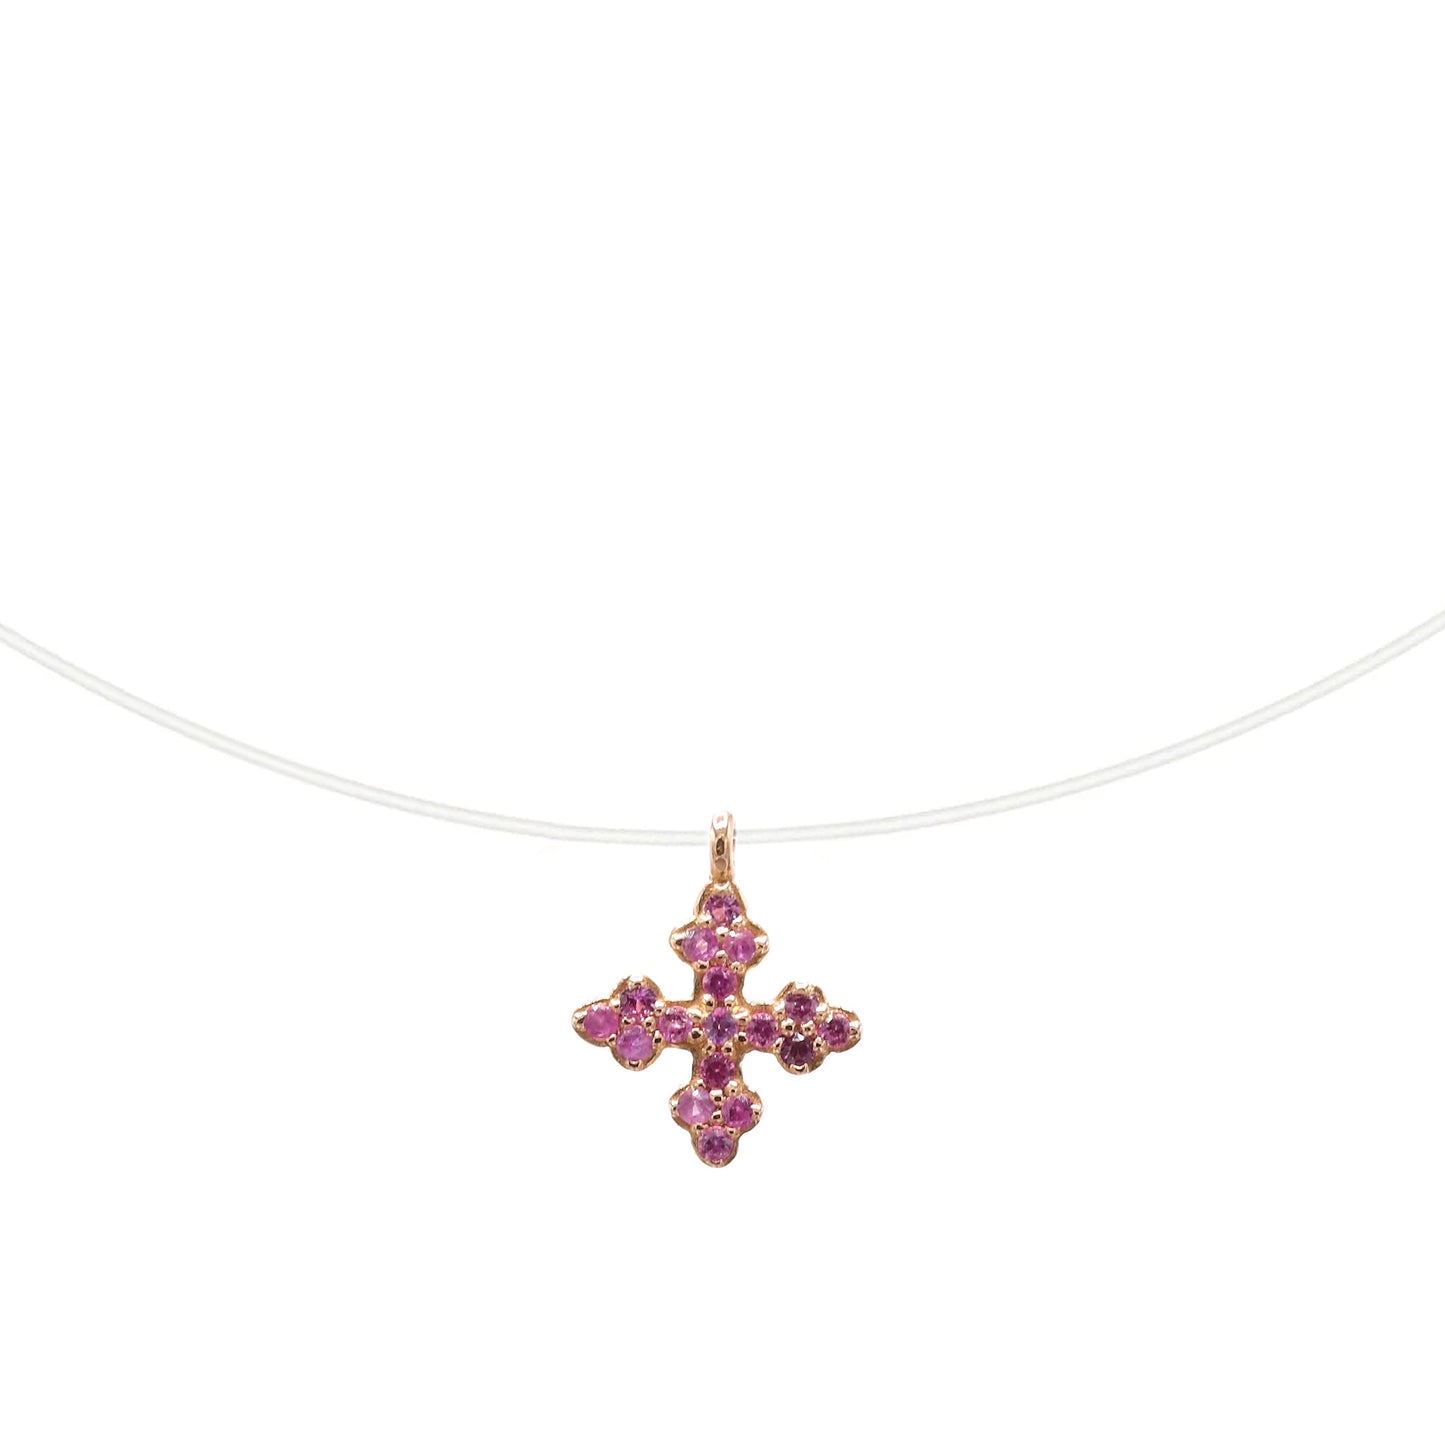 Fishing Line Choker with a Pink Sapphire Cross - Oria.jewelry